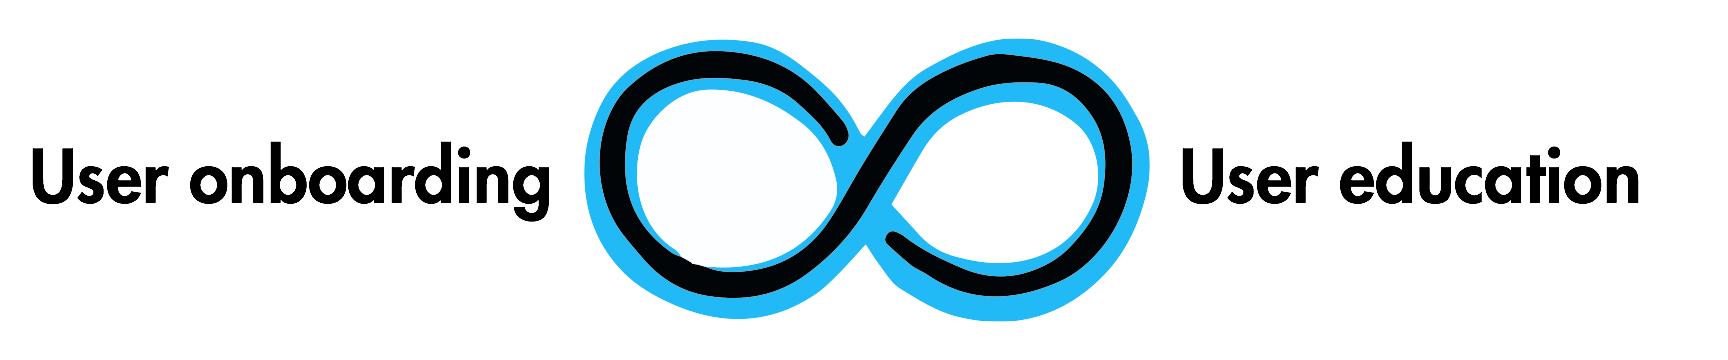 Illustration of infinity symbol